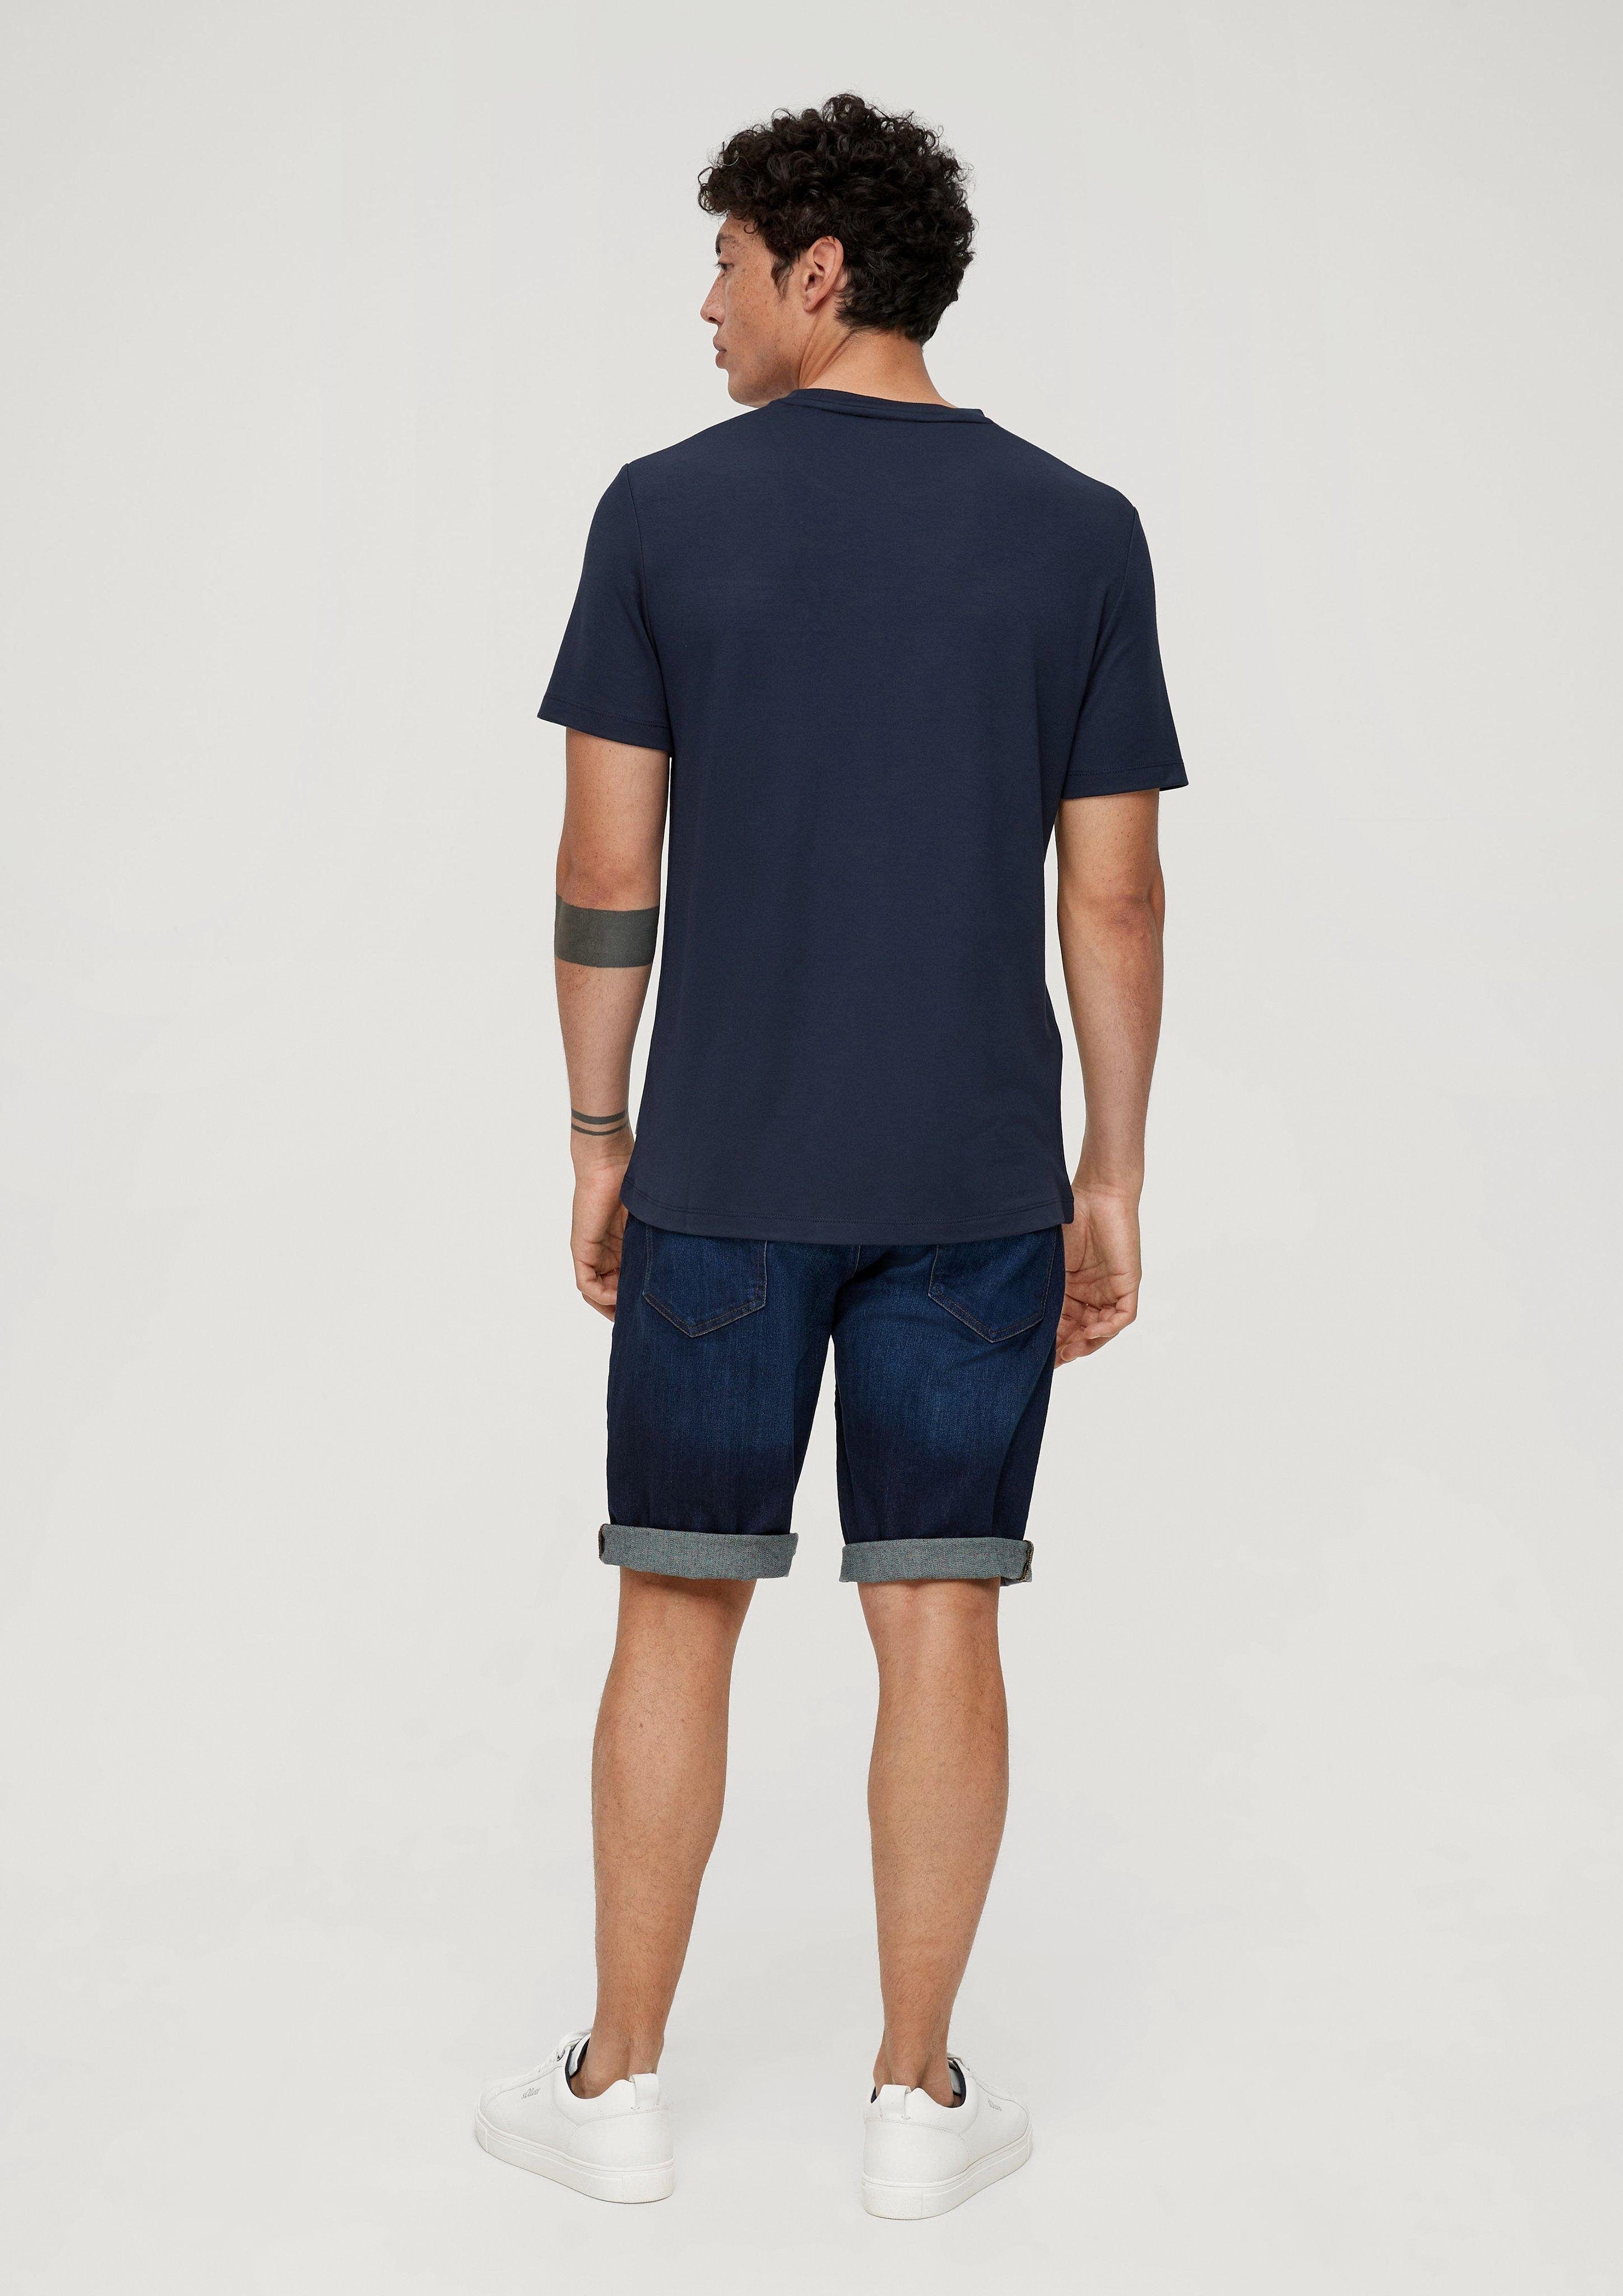 s.Oliver Kurzarmshirt Hochwertiges Modal T-Shirt navy mit Piquéstruktur